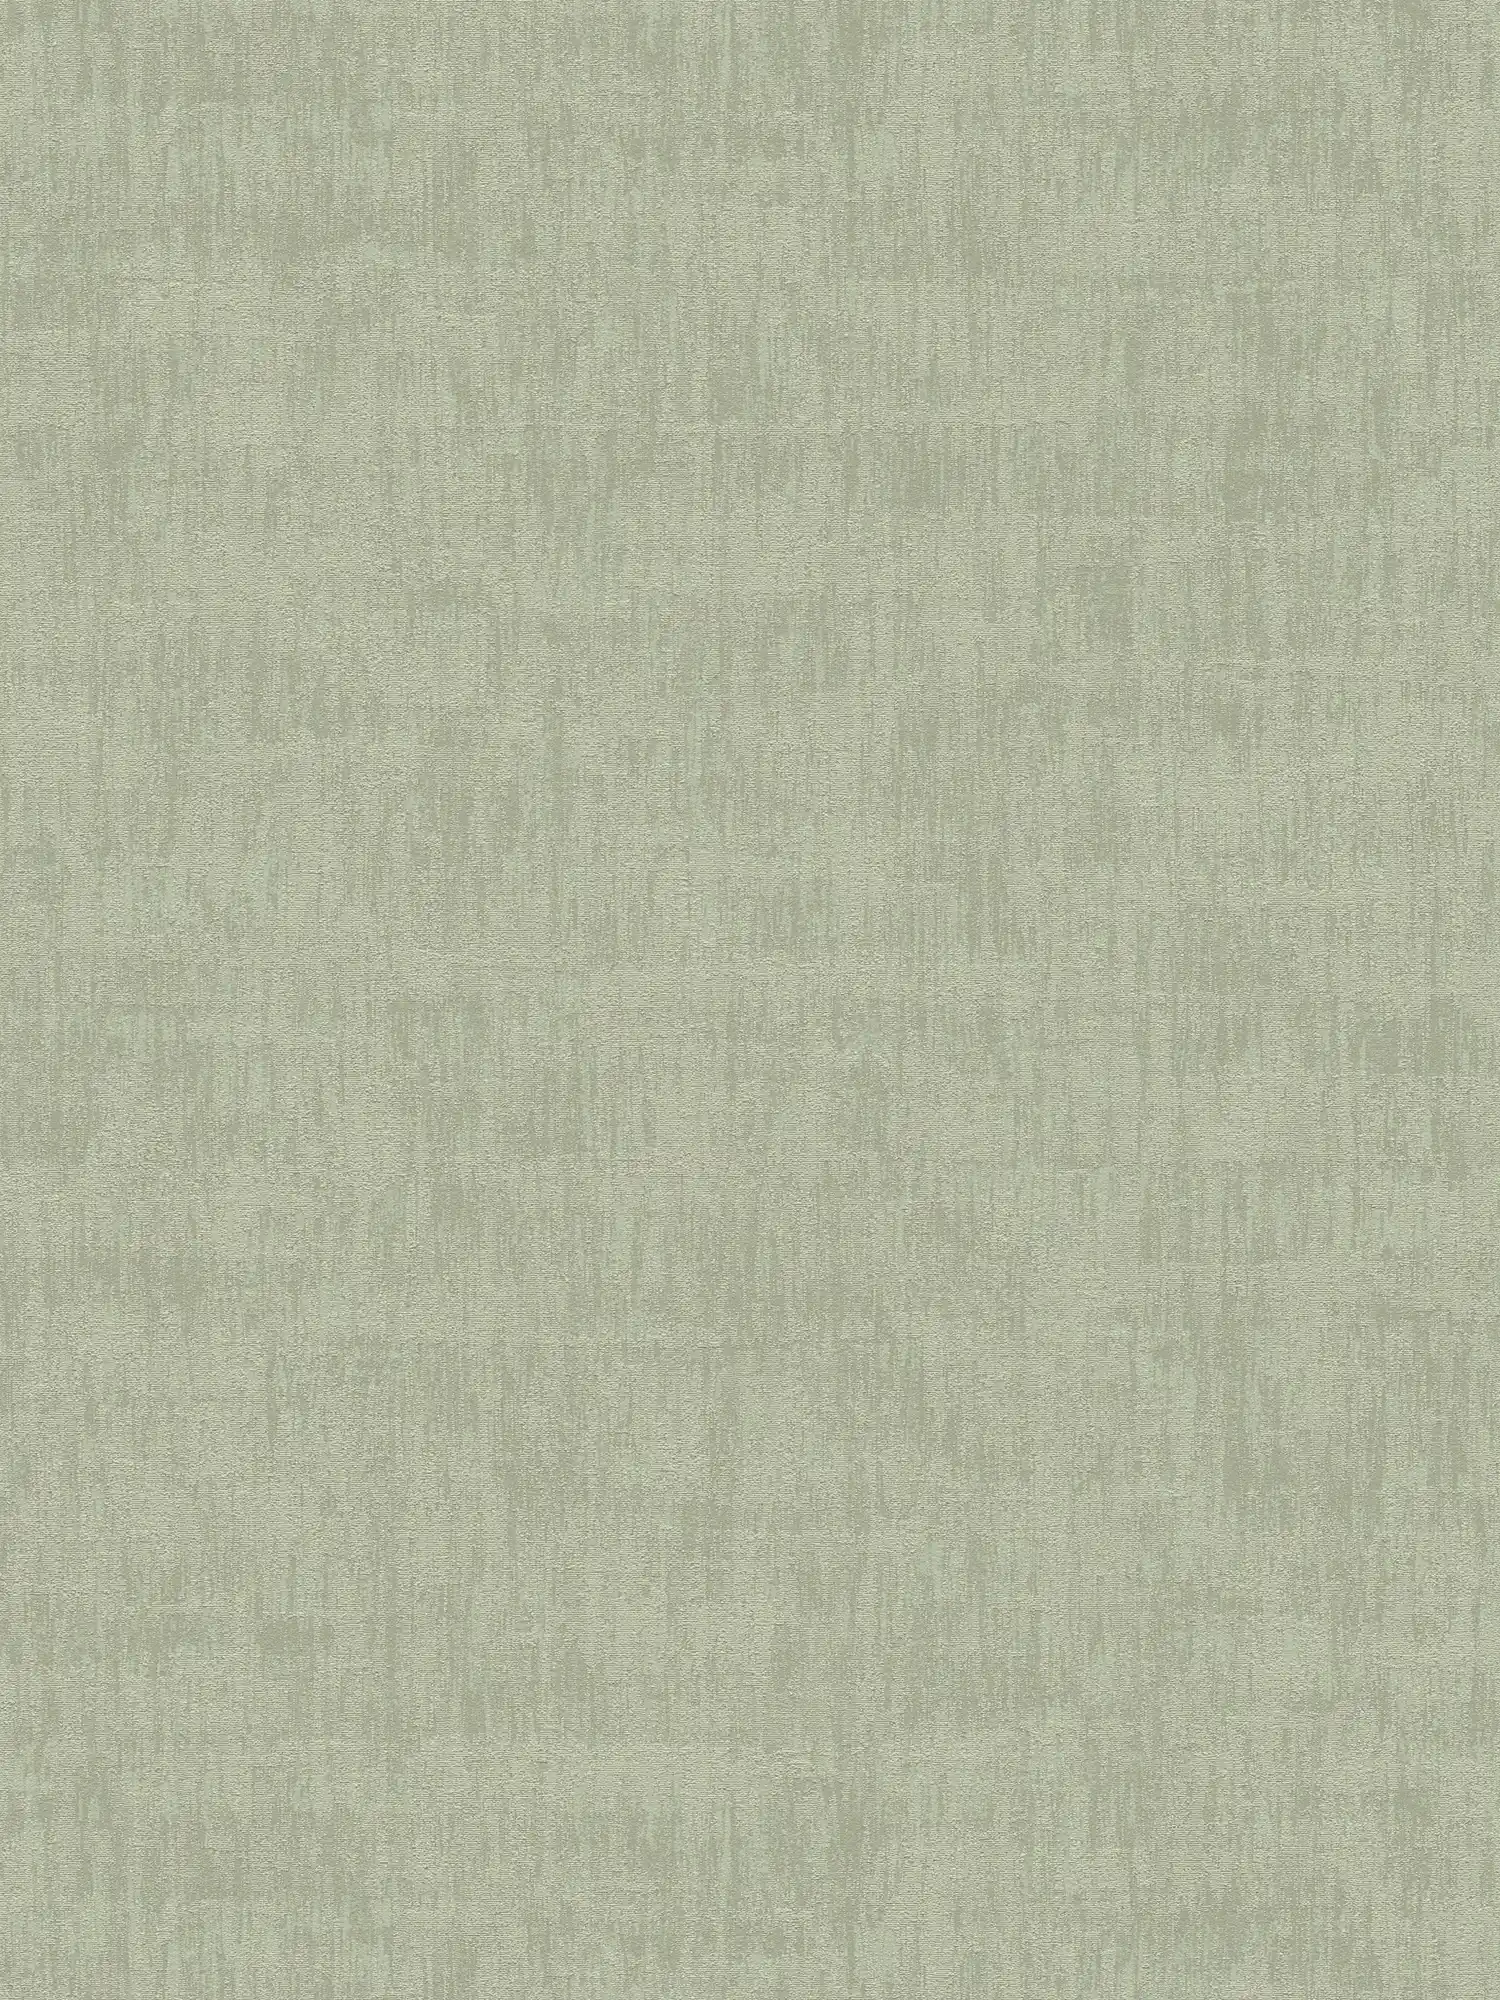 Abstract raffia patroon behang - groen
